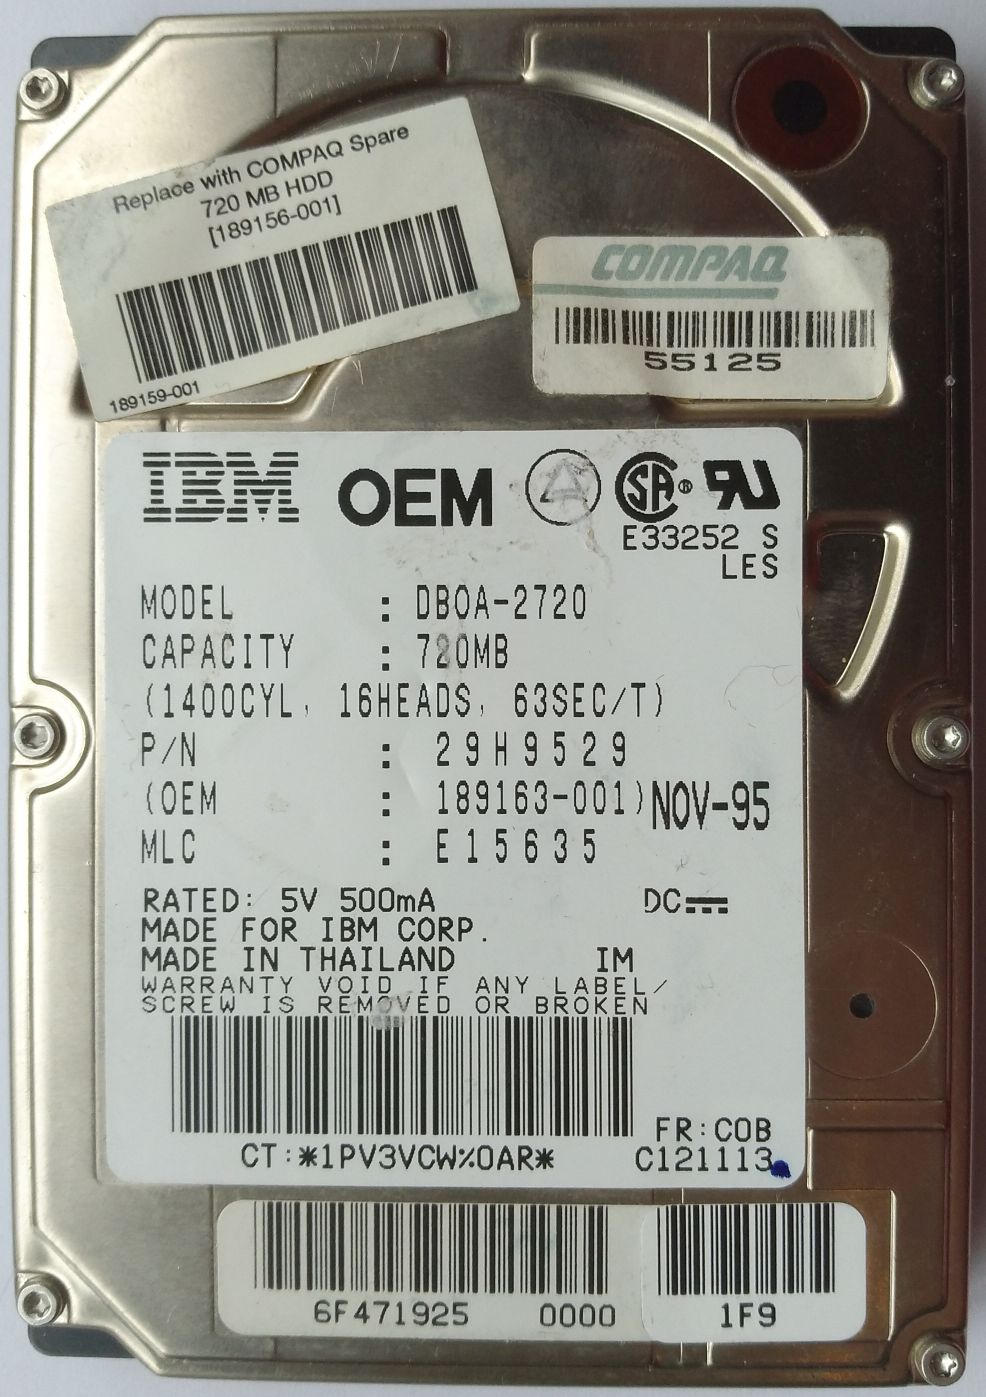 HDD PATA/33 2.5" 720MB / IBM Travels LP (DBOA-2720)